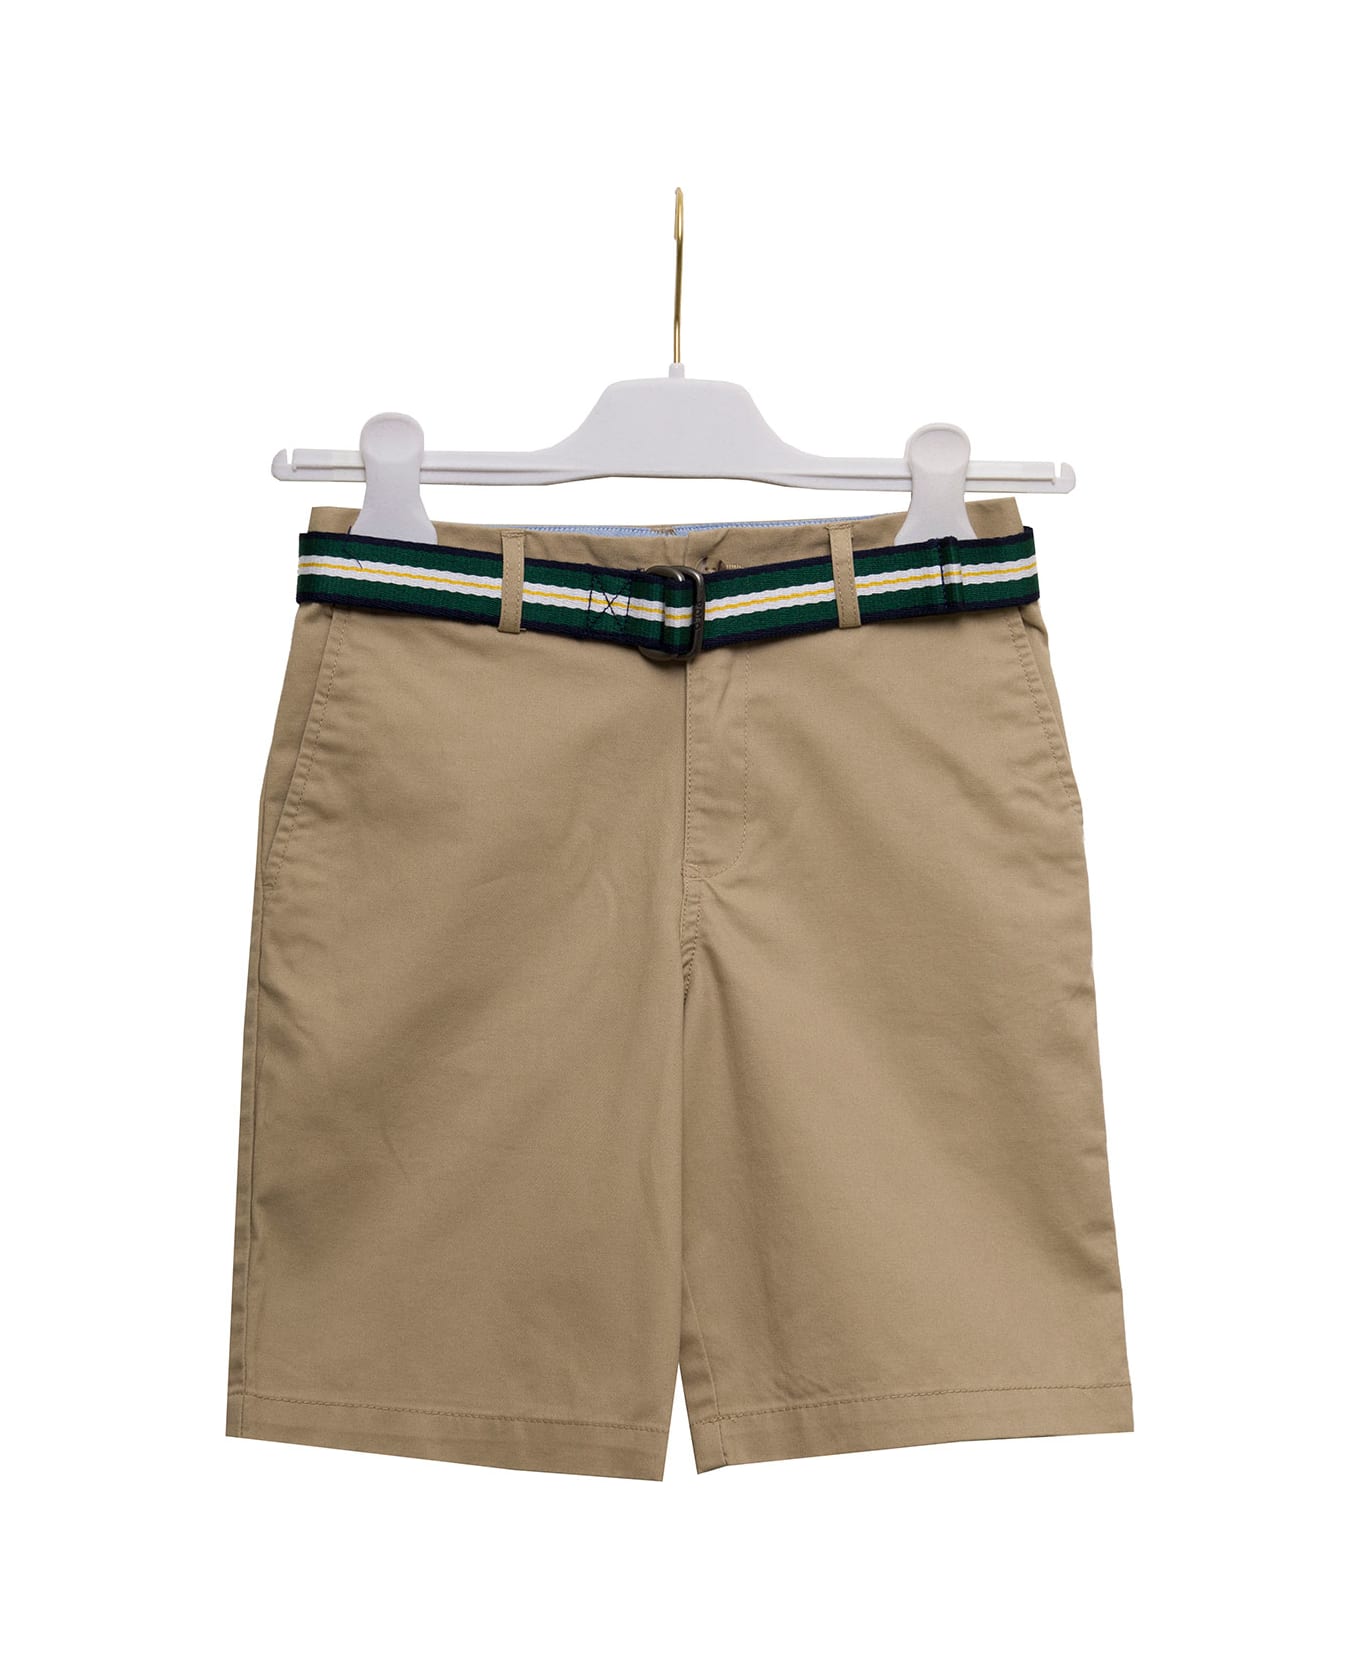 Ralph Lauren Polo Ralph Lauren Kids Boy's Beige Cotton Shorts With Belt - Beige/Khaki